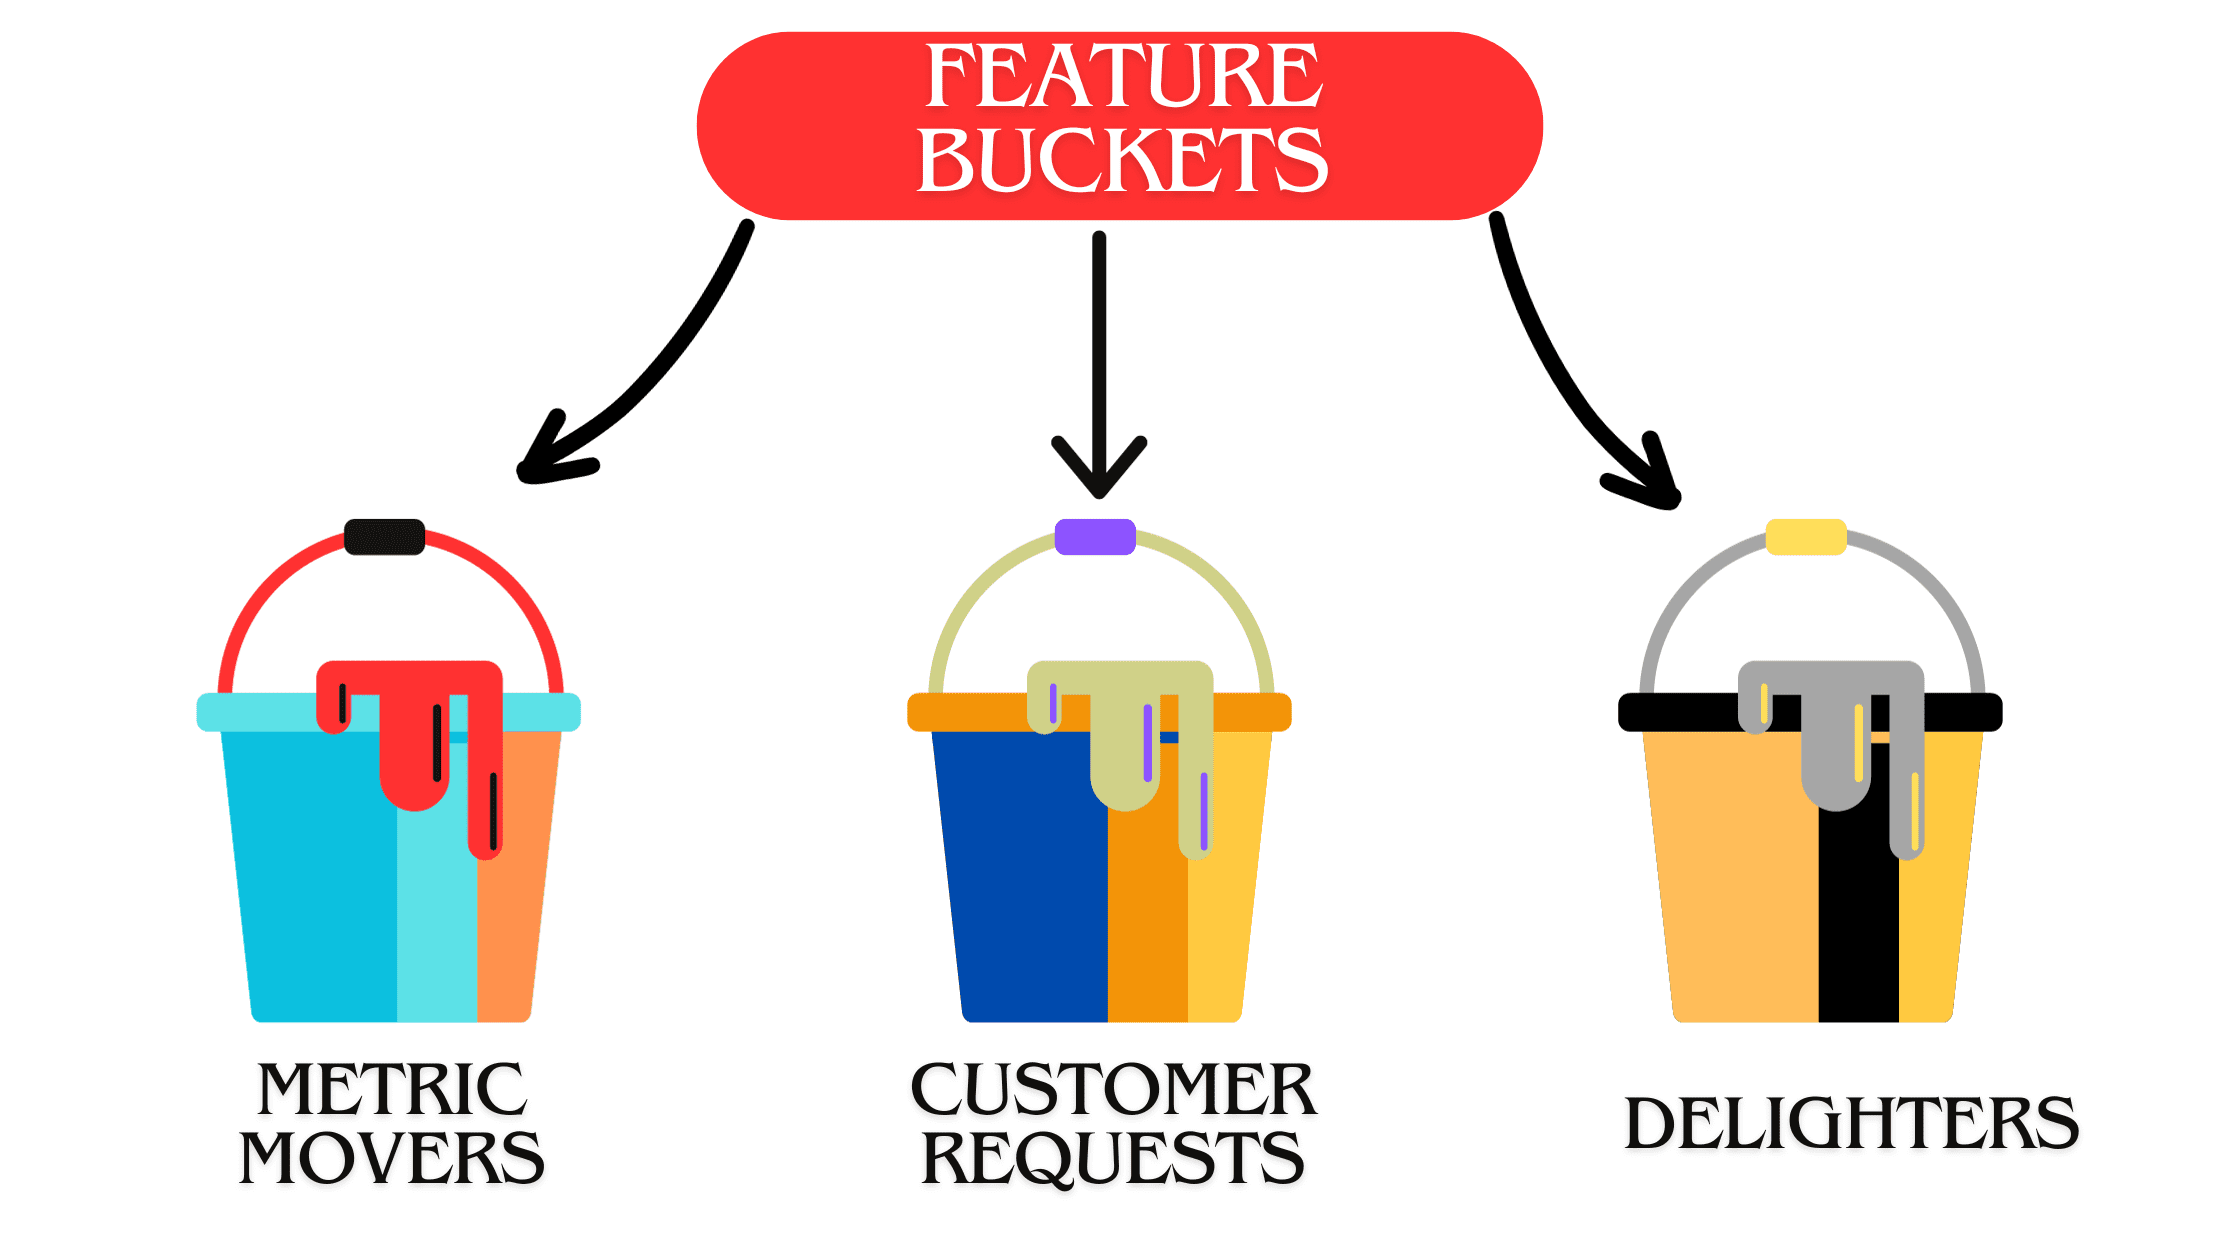 Feature Buckets